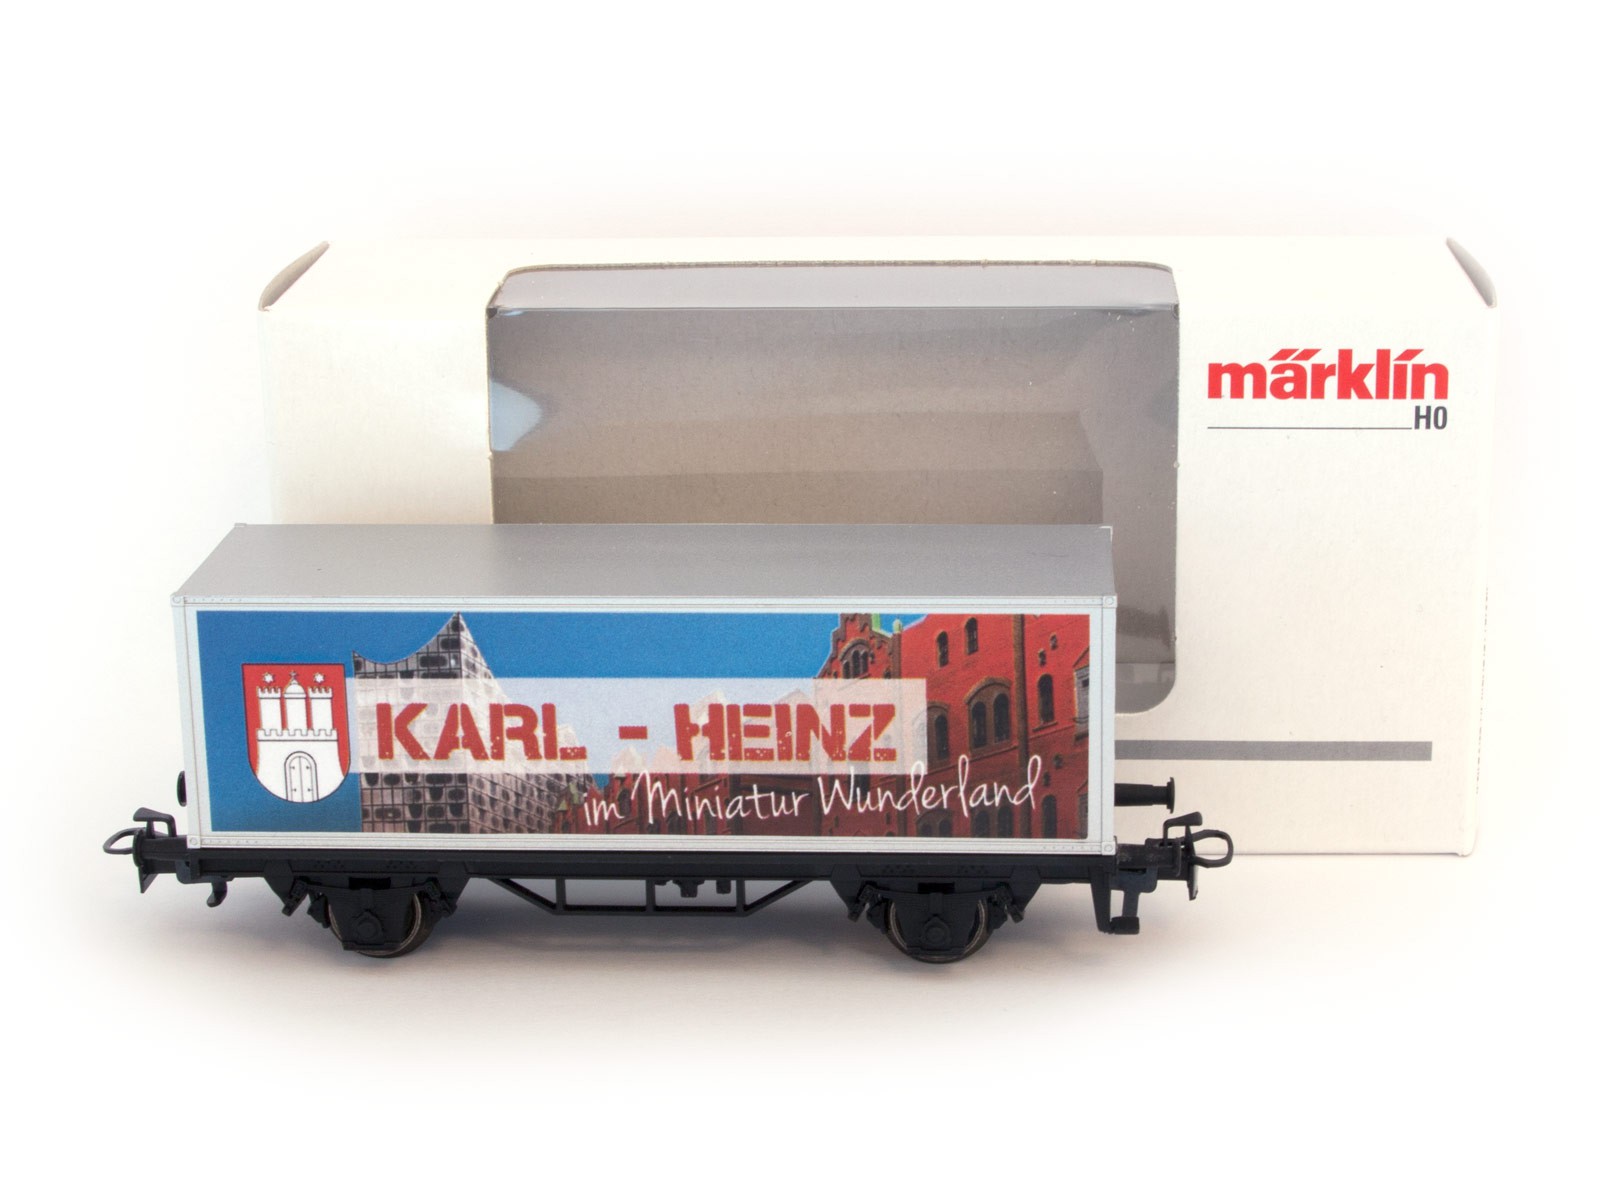 Miniatur Wunderland / Märklin H0 special wagon with YOUR NAME